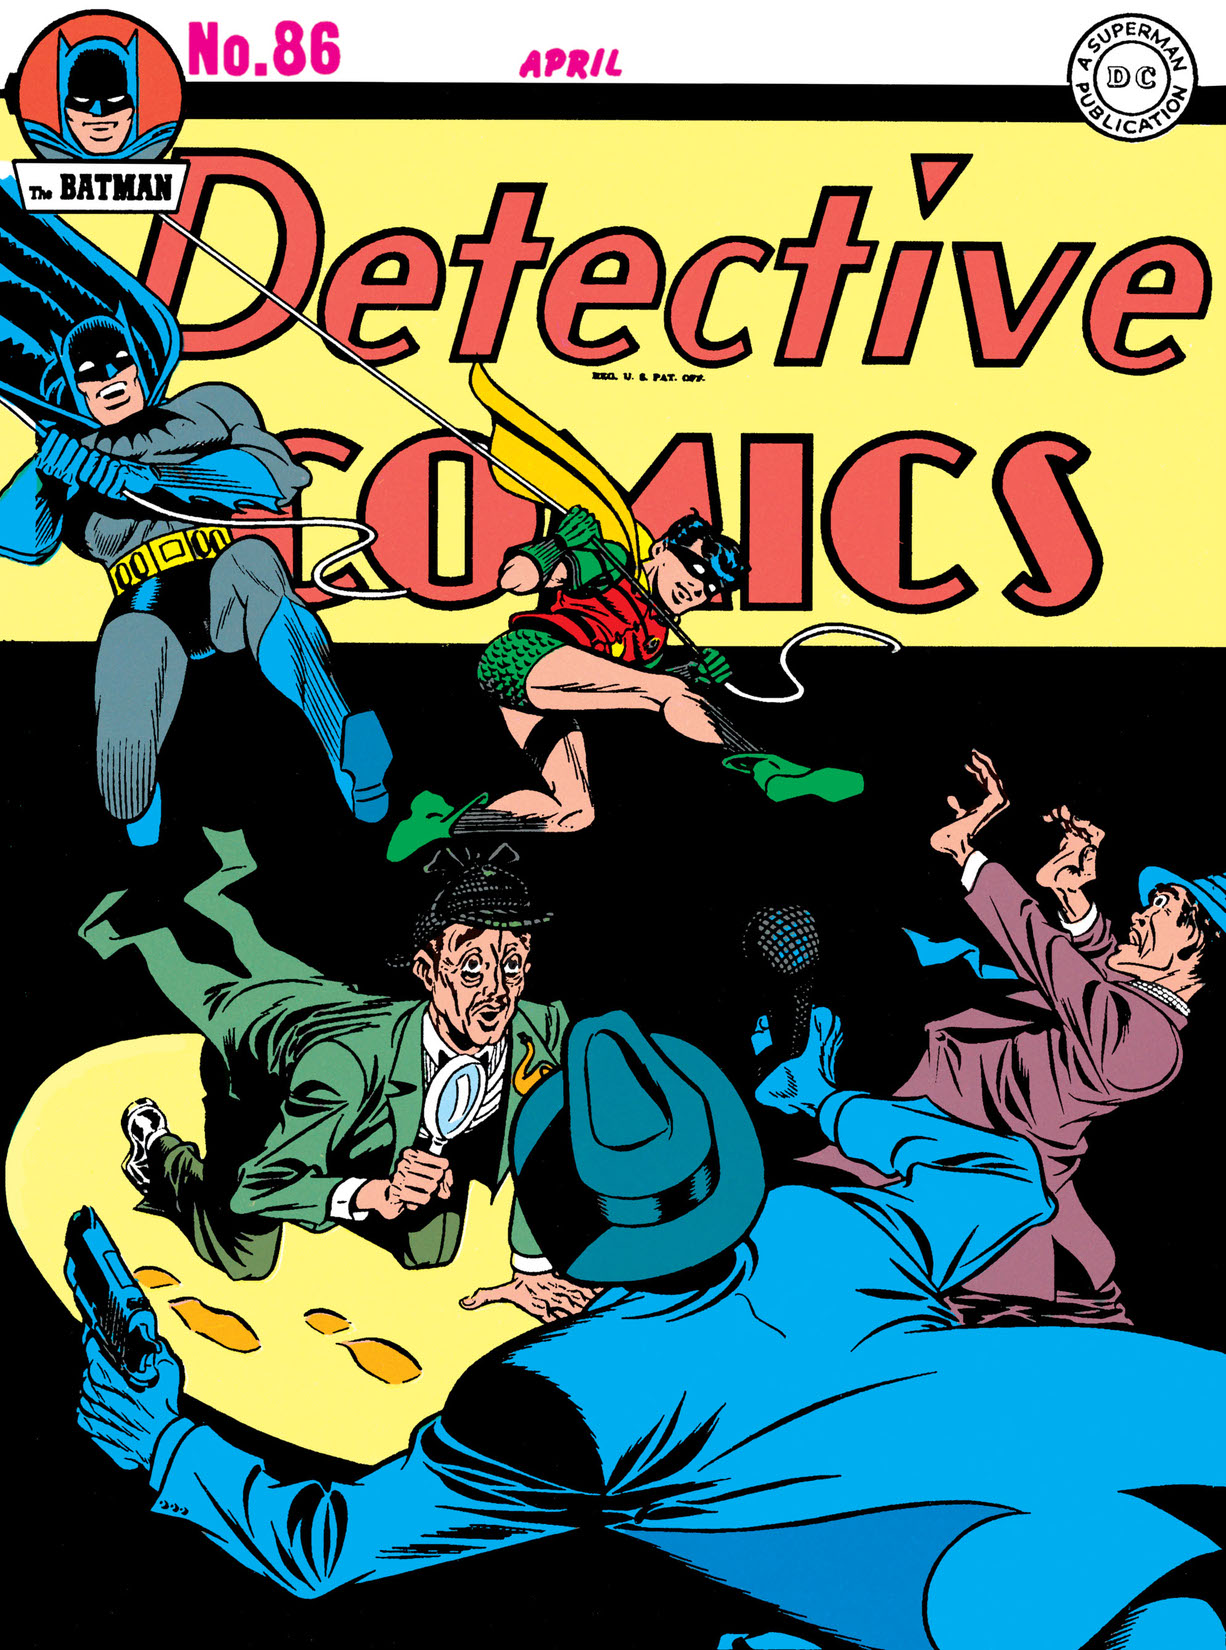 Detective Comics (1937-) #86 preview images